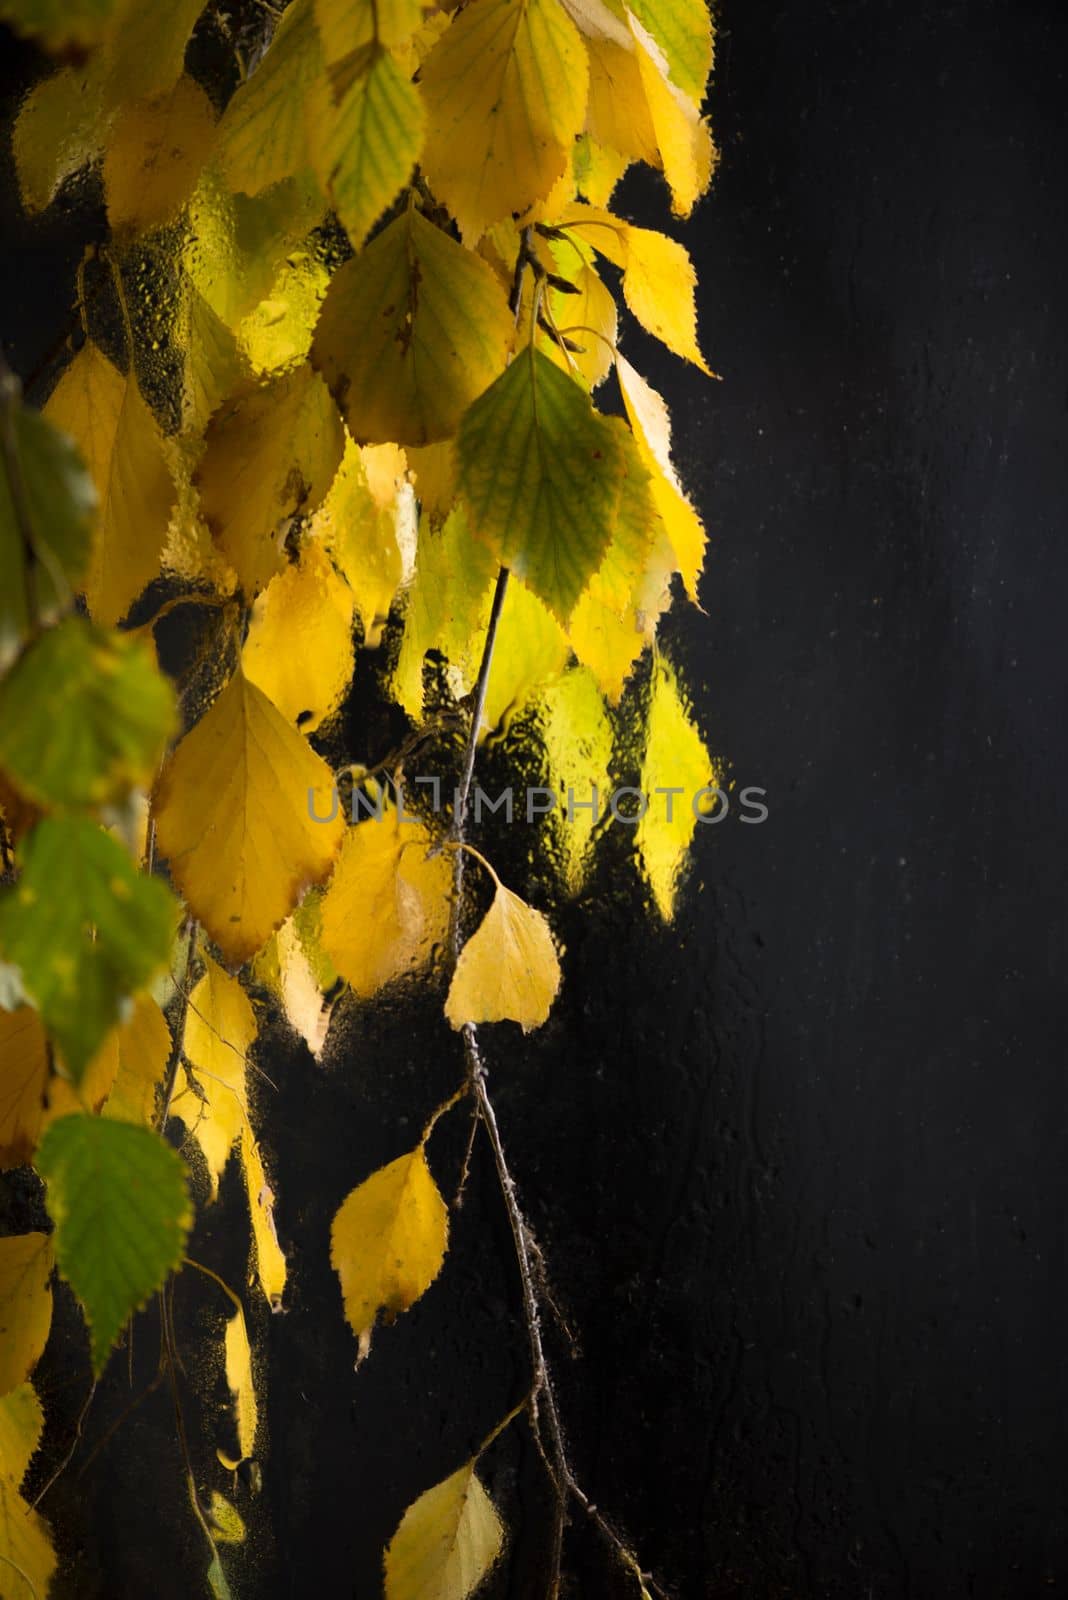 Autumn form. Yellowed birch branches through a wet rainy window